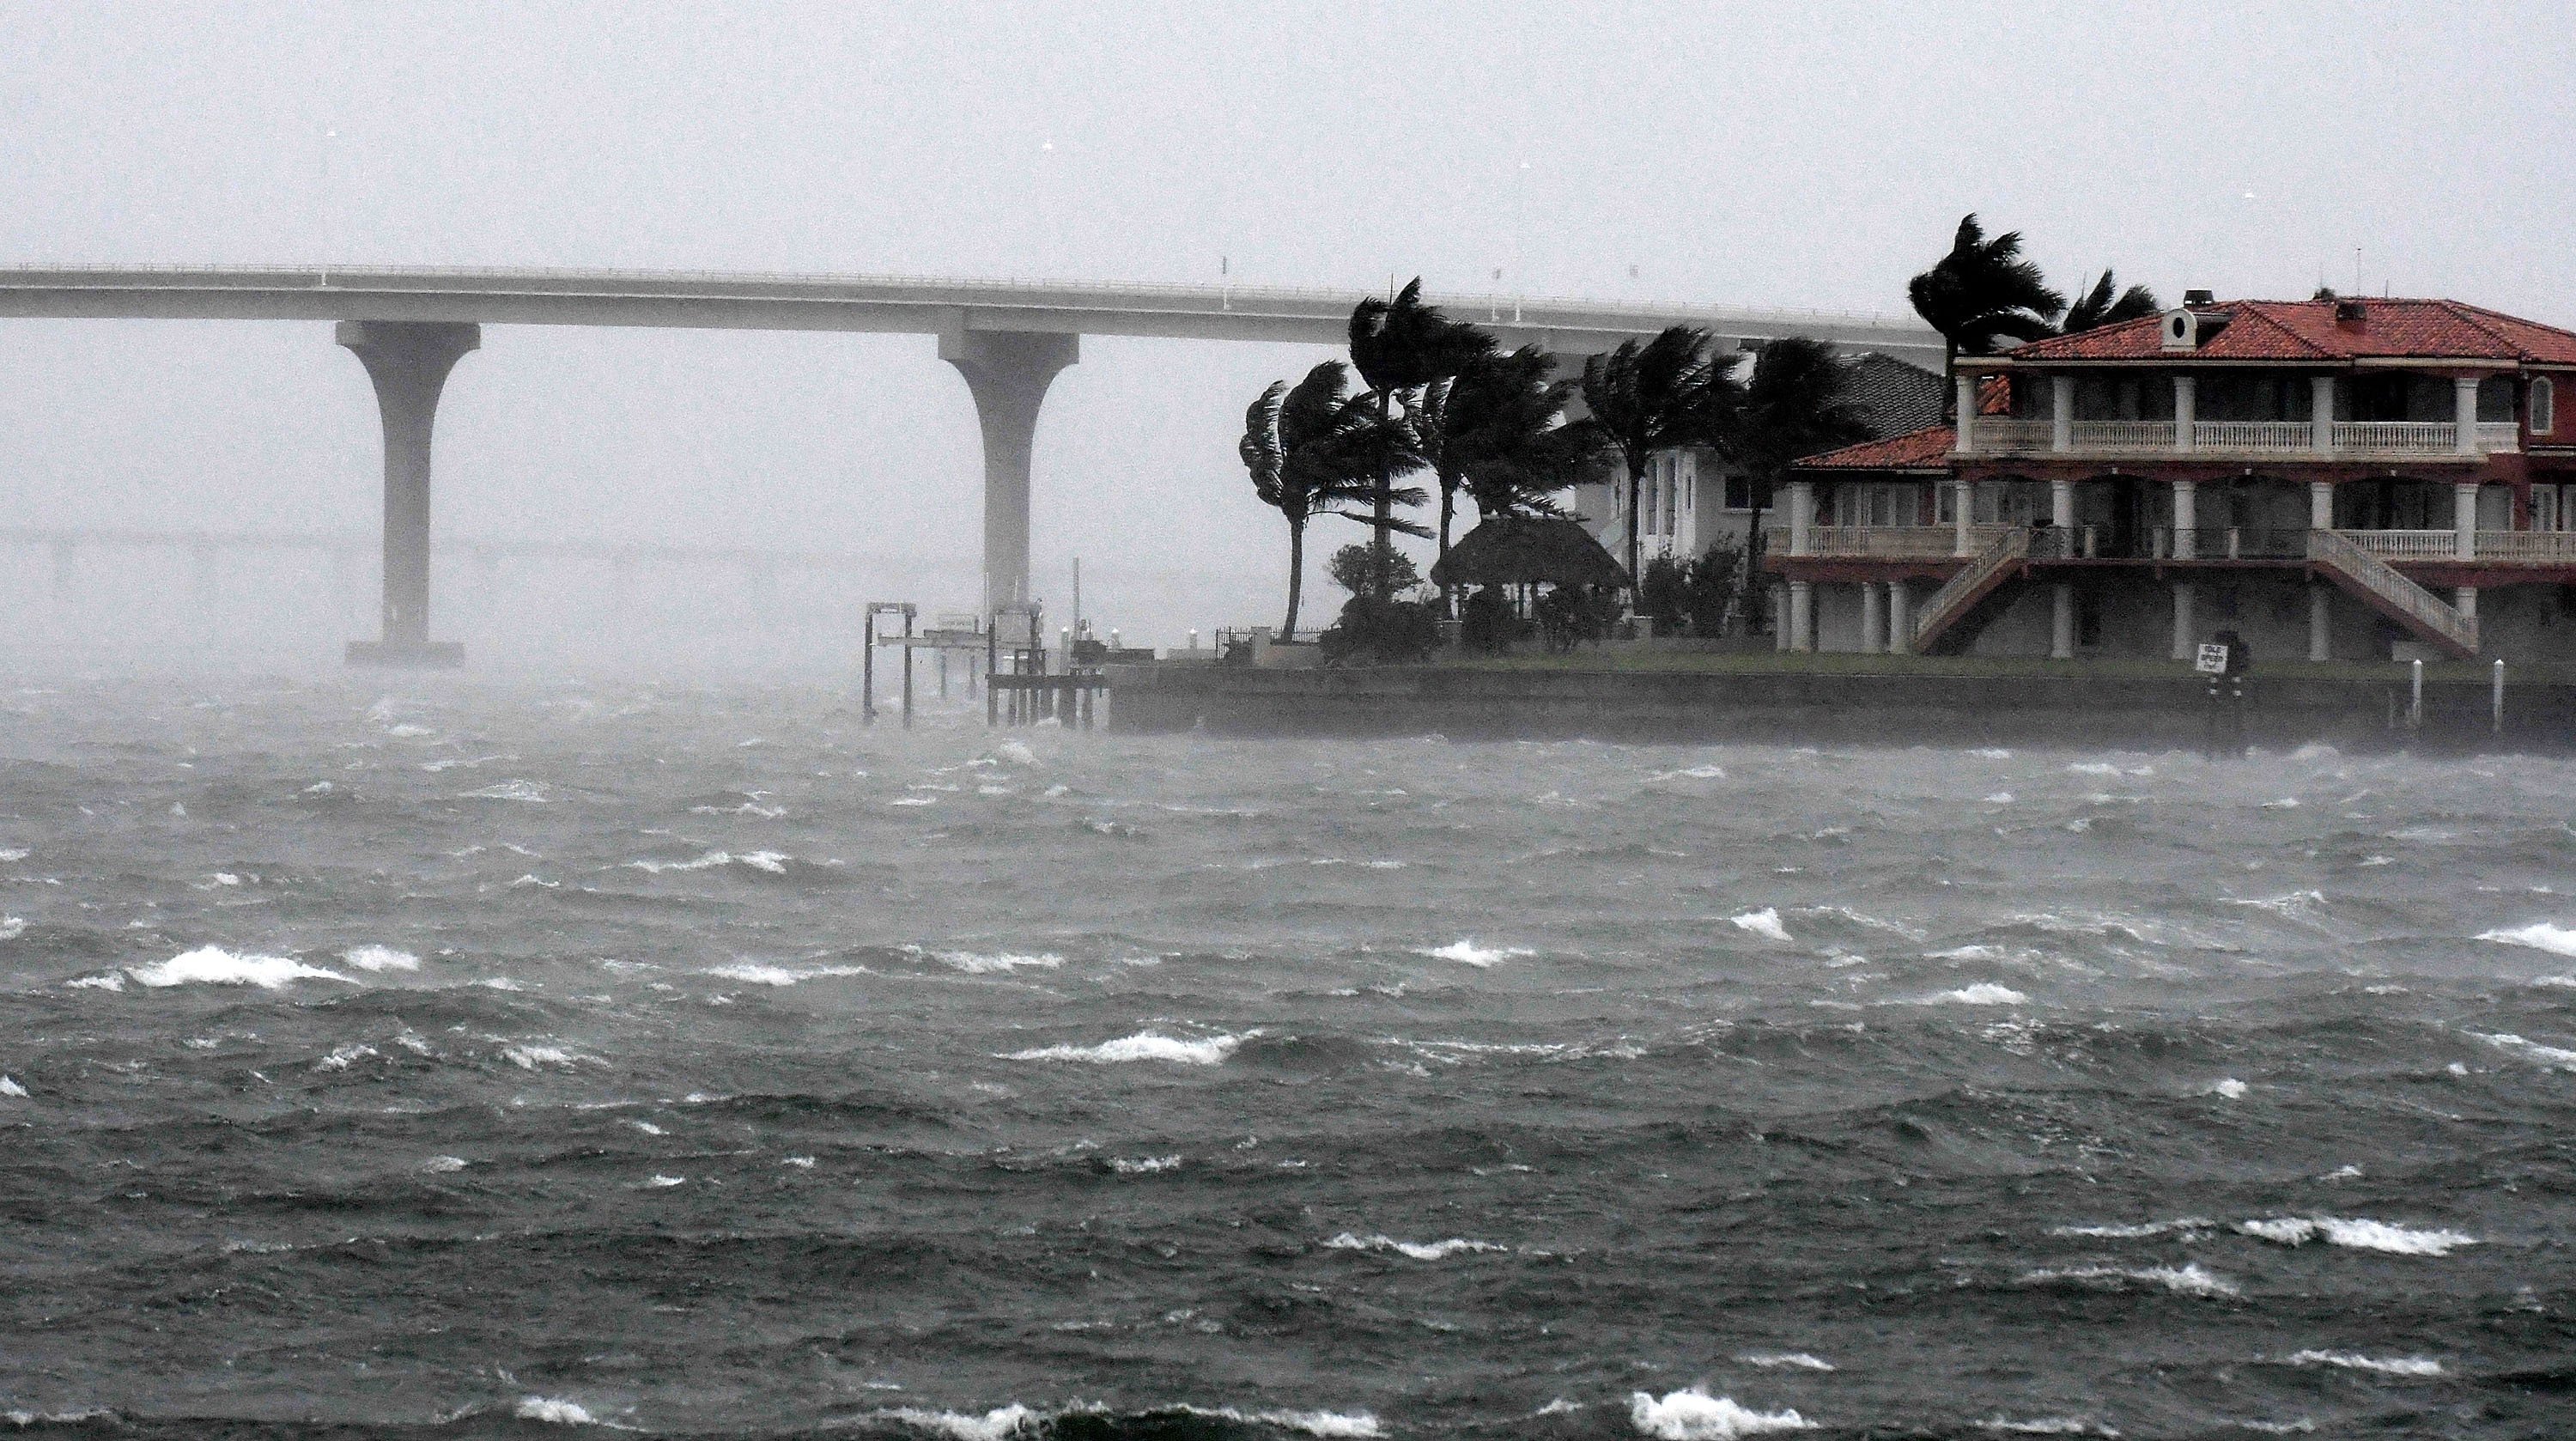 Saint Petersburg, Florida being hit by high winds as Ian made landfall